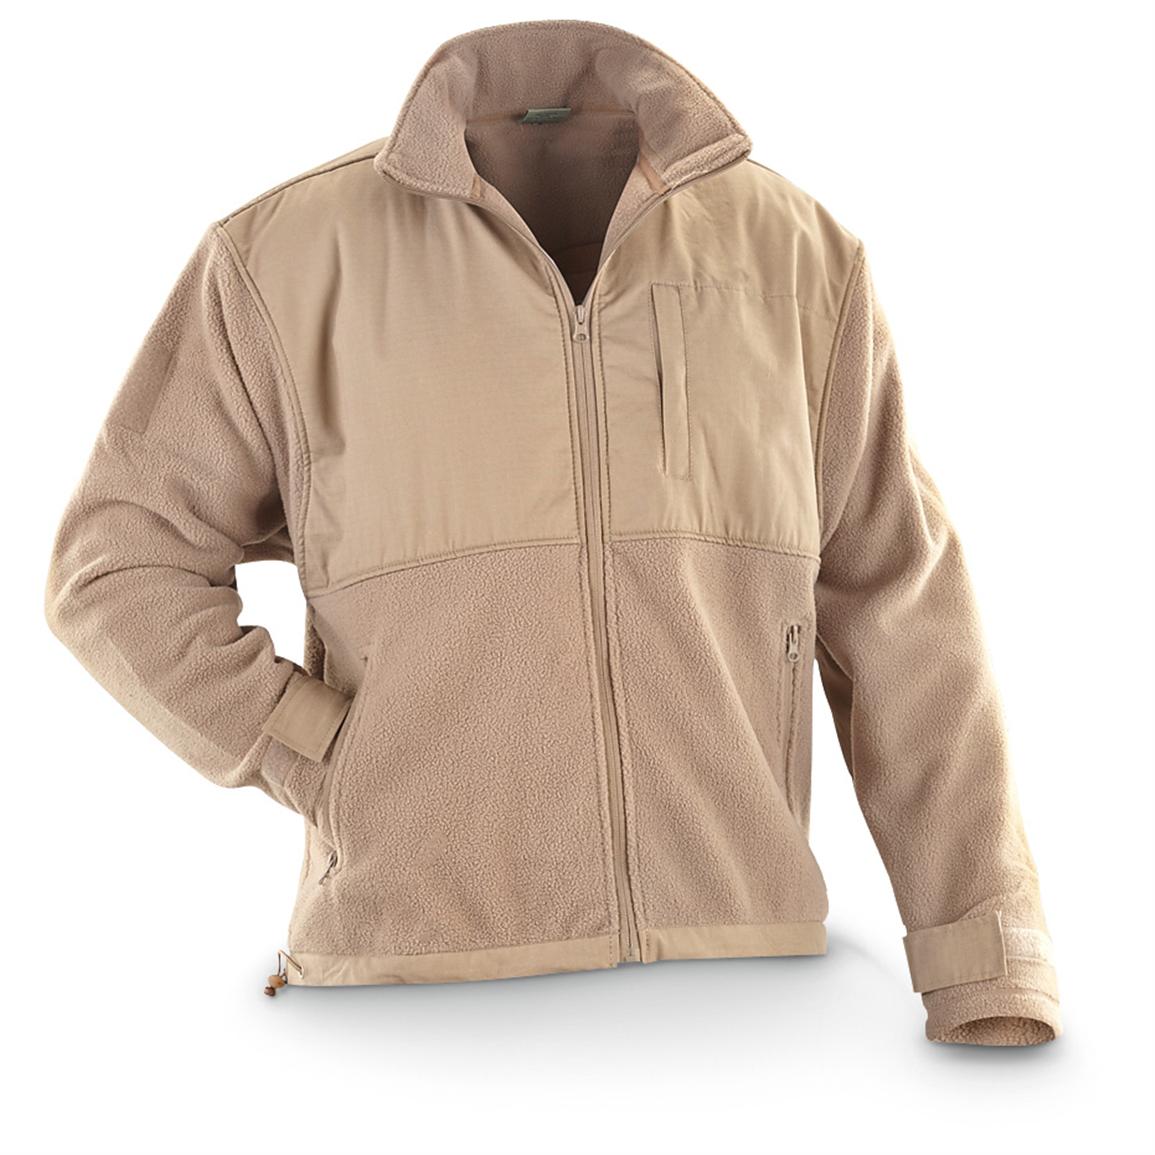 Mil-Tec Fleece Jacket, Coyote - 421204, Tactical Clothing at Sportsman ...